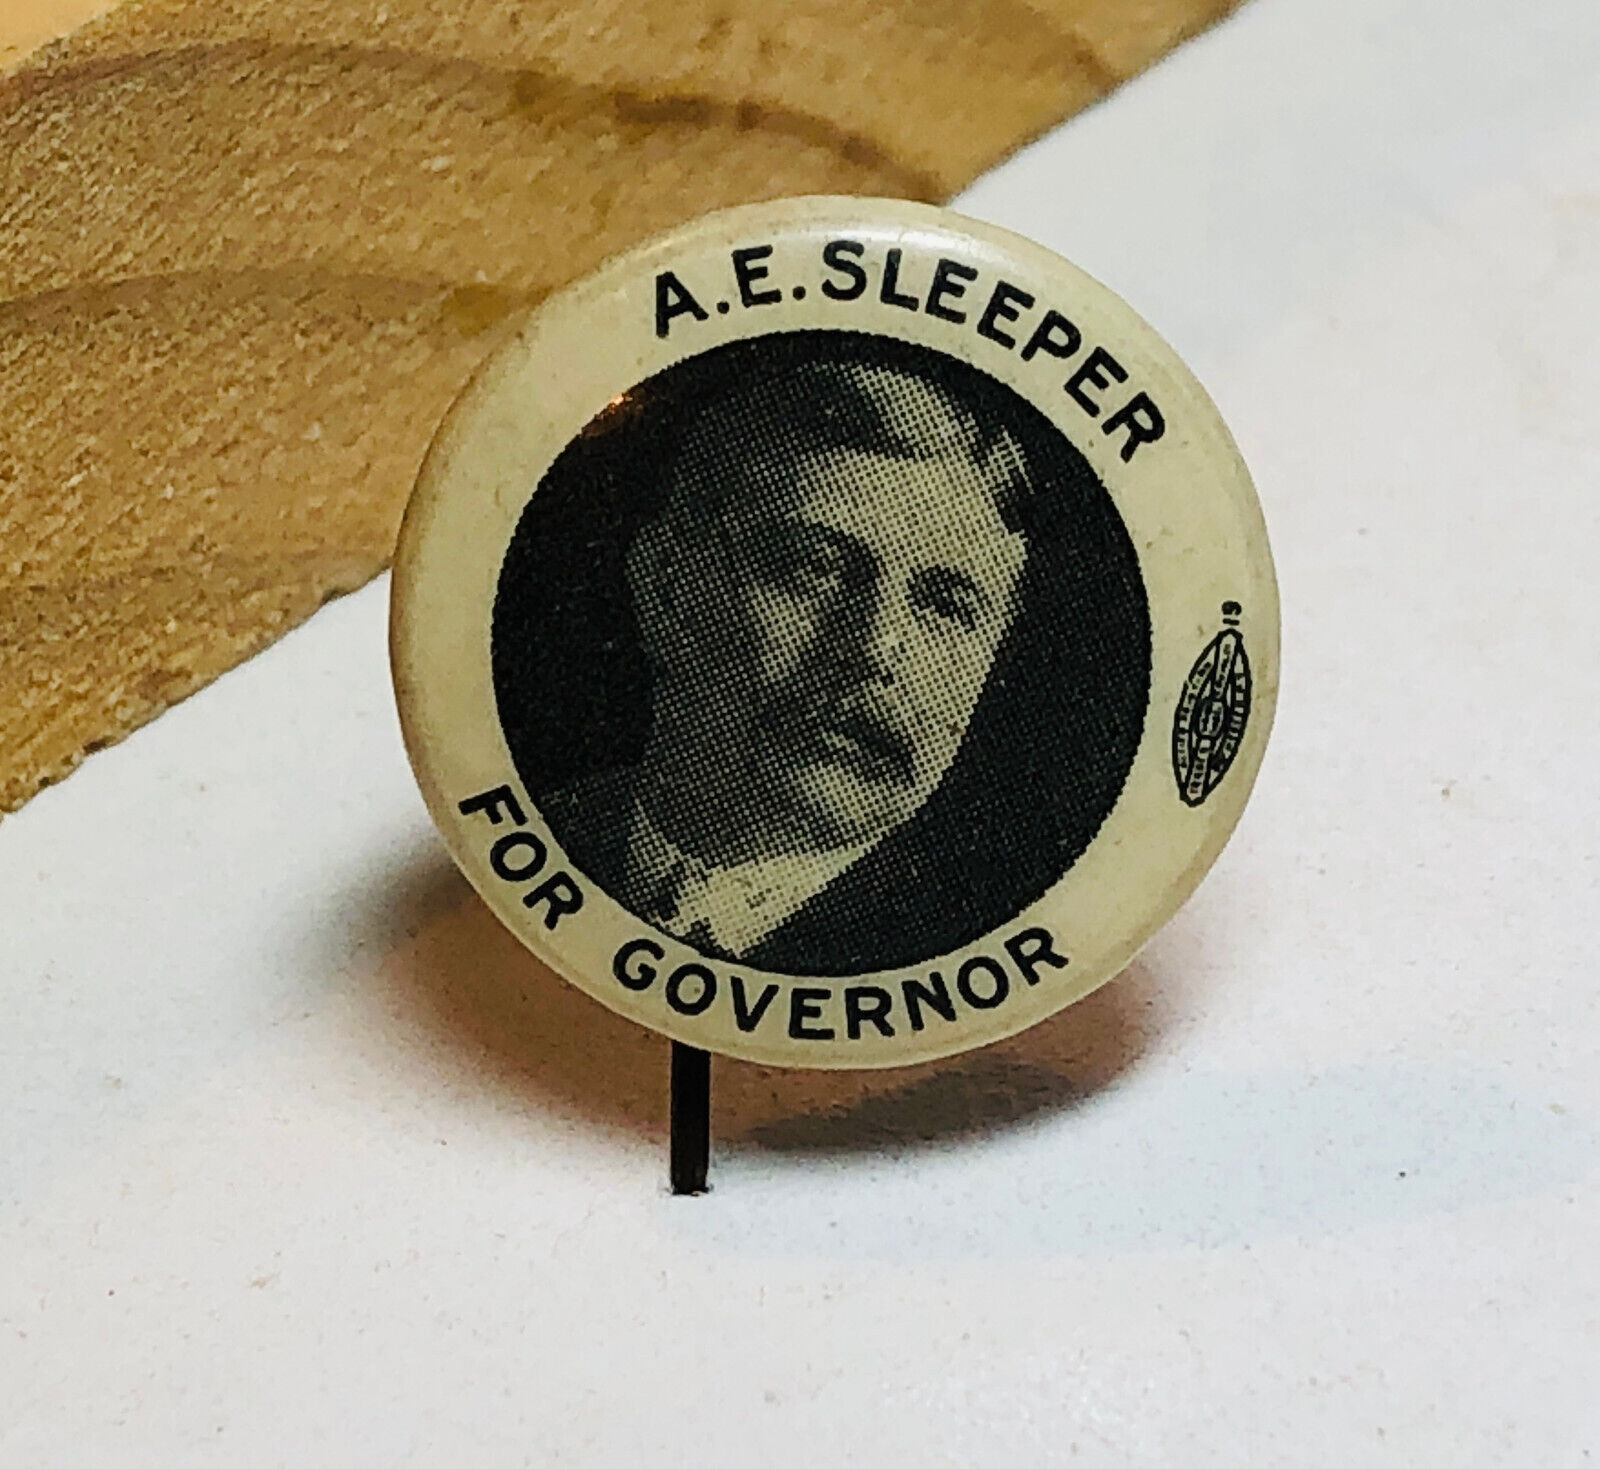 Rare 1916 A.E. Sleeper for Governor Political Pin - 29th Michigan Governor